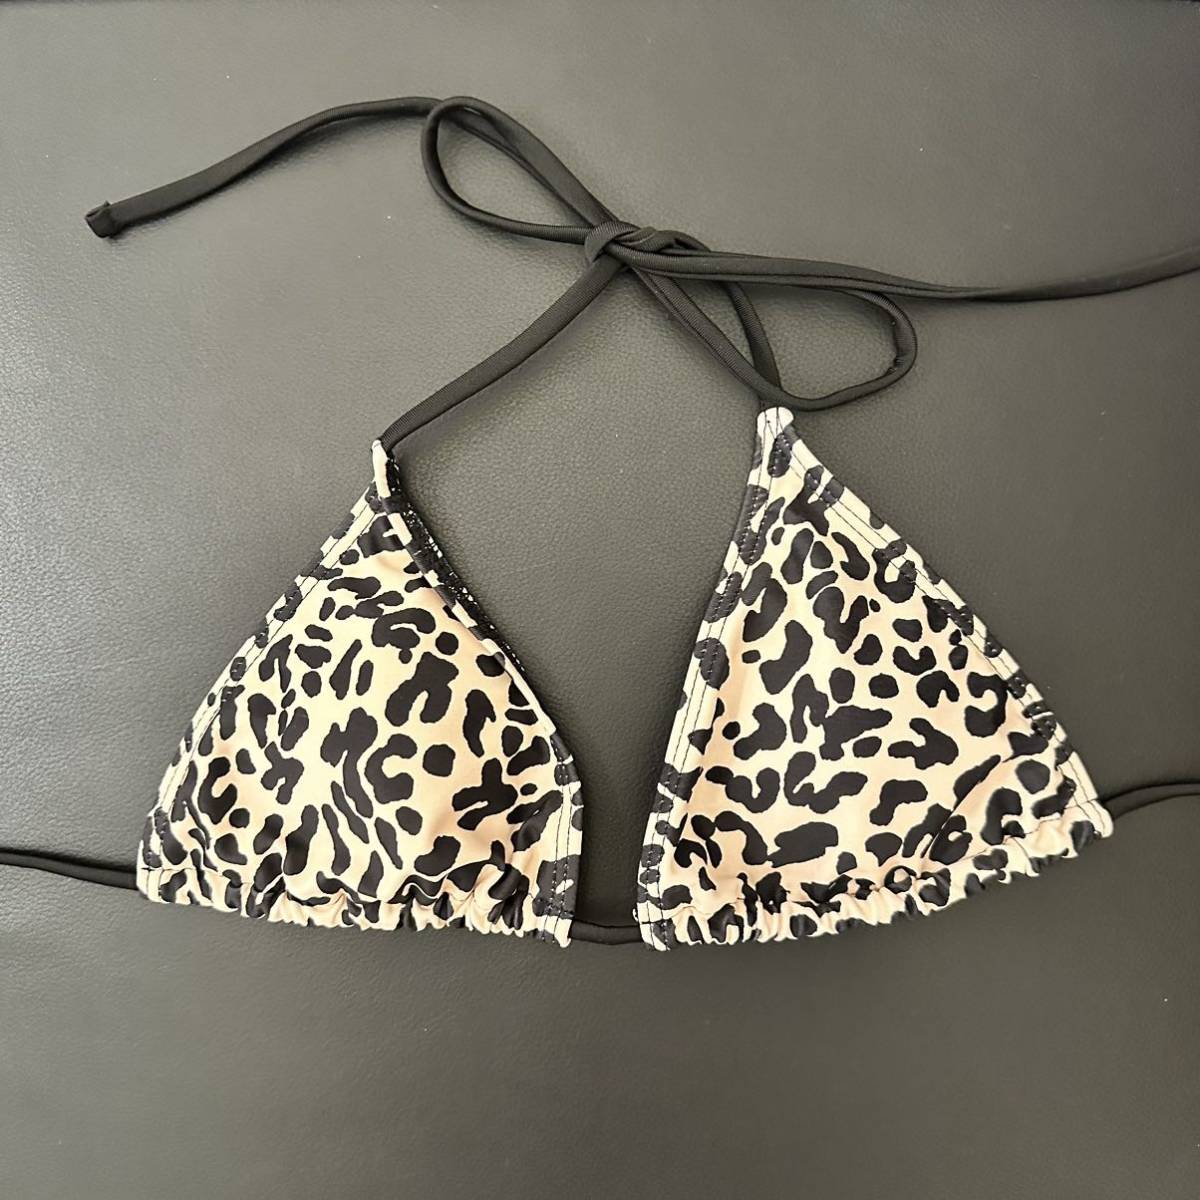  leopard print halter-neck bikini top and bottom set lady's swimsuit 